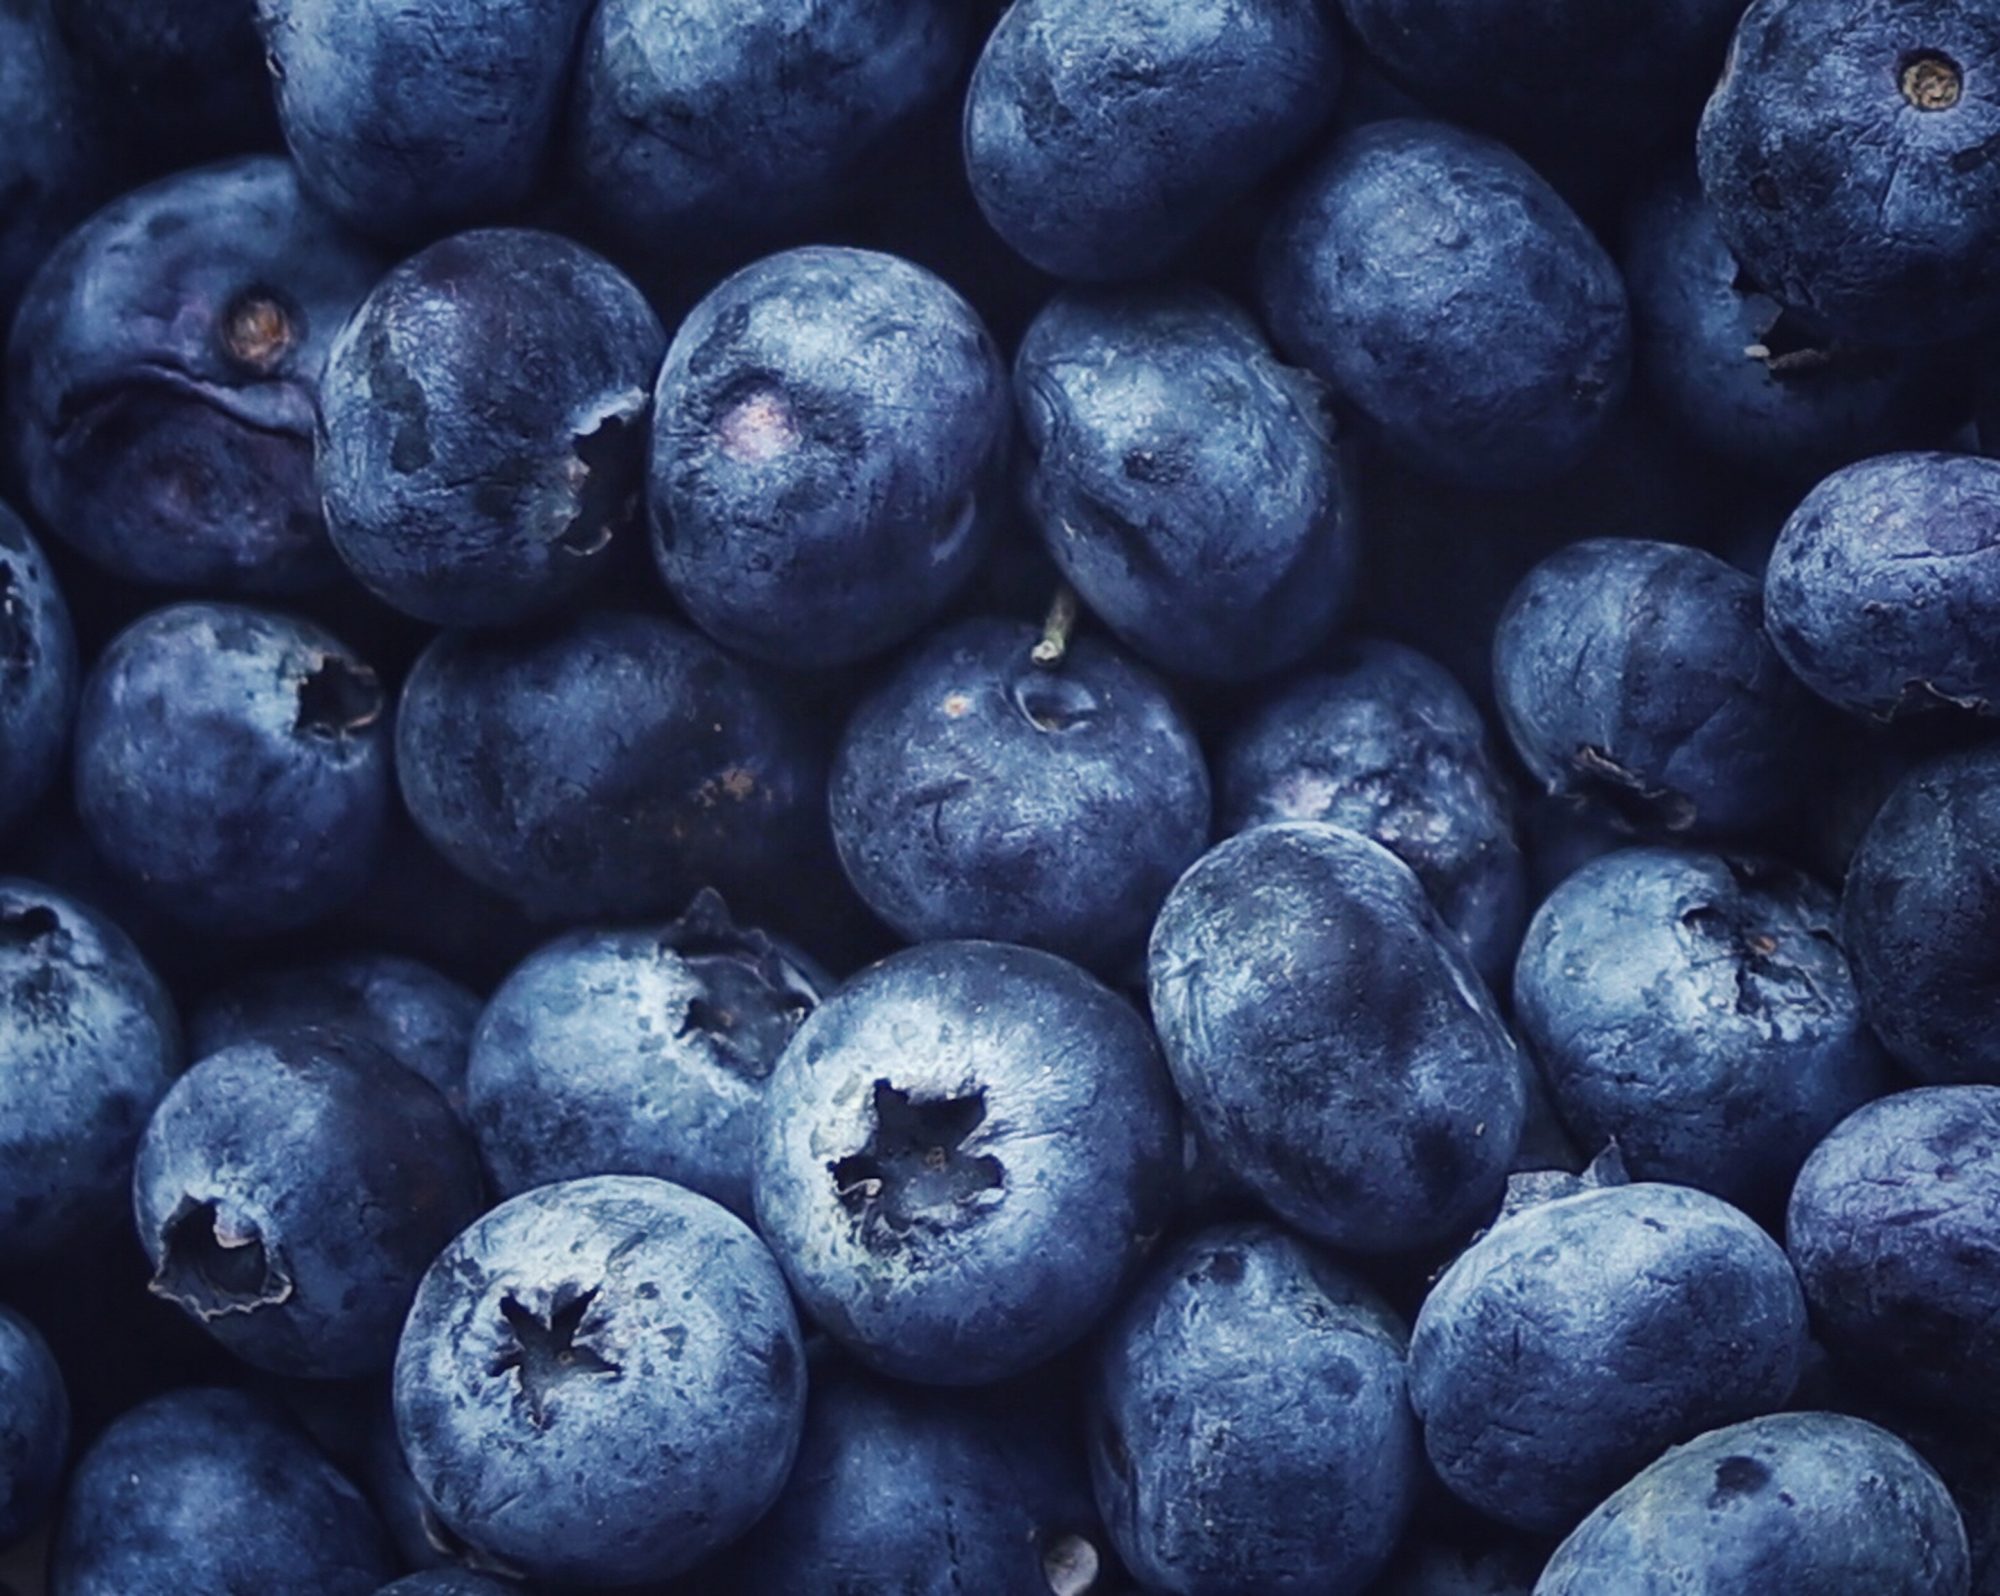 Dole Recalls Blueberries Due to Possible Cyclospora Contamination